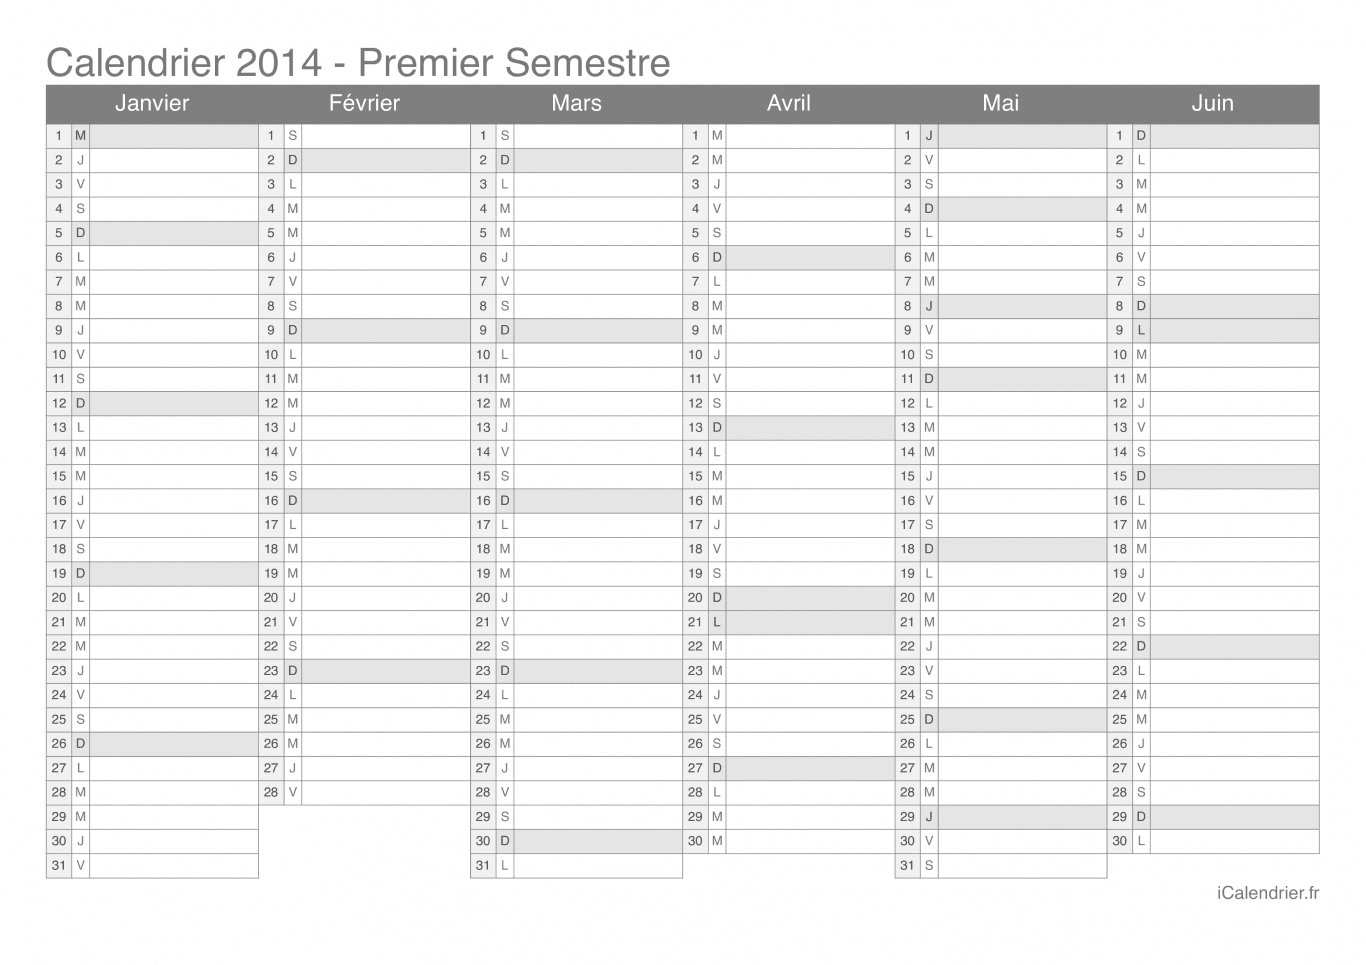 Calendrier par semestre 2014